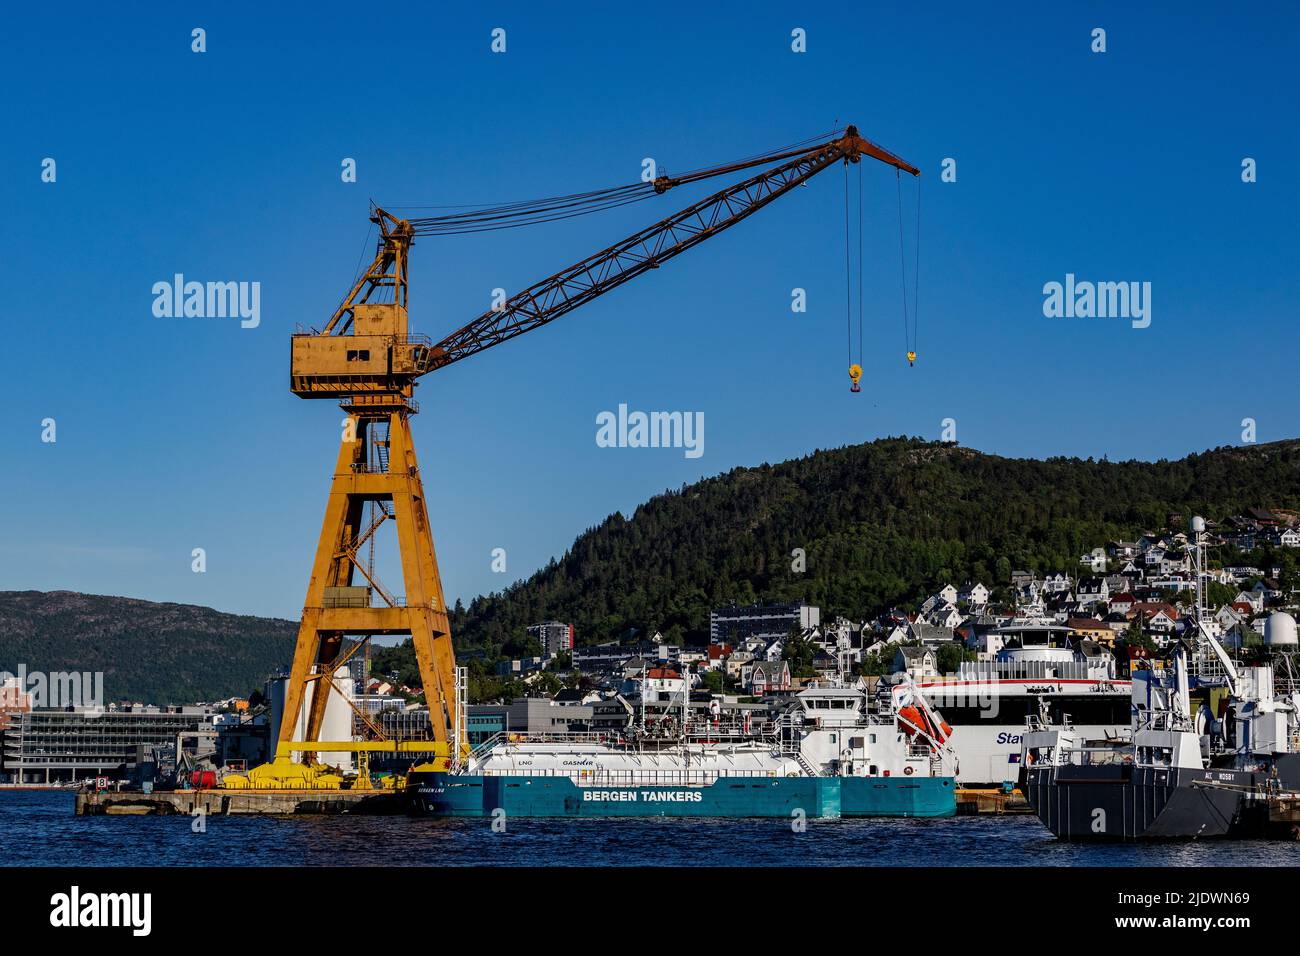 Tanker vessel Bergen LNG at the old BMV shipyard at Laksevaag, near port of Bergen, Norway. Stock Photo